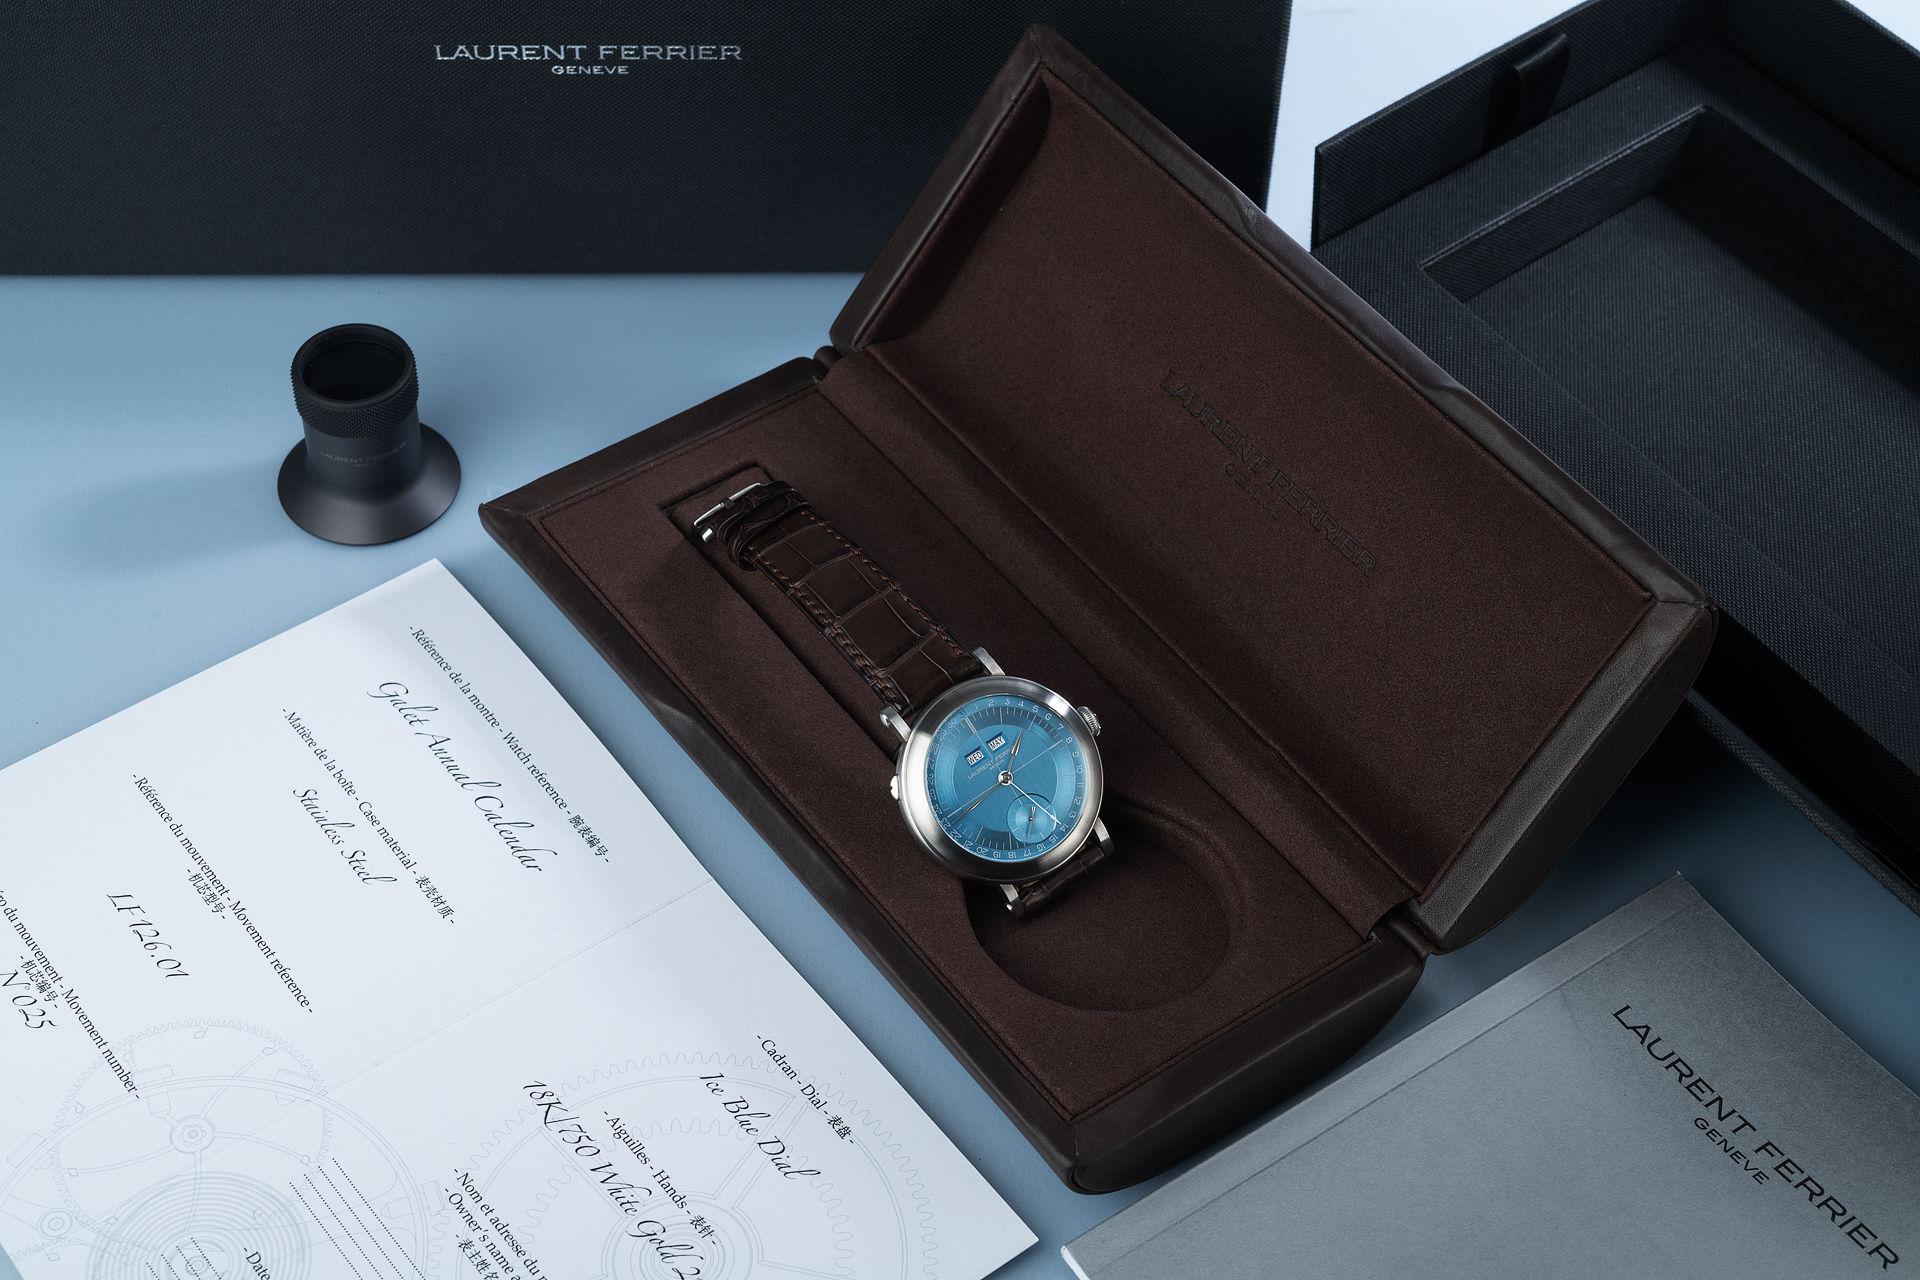 Laurent Ferrier Galet Annual Calendar Watches | ref LF126.01 | 'Montre ...